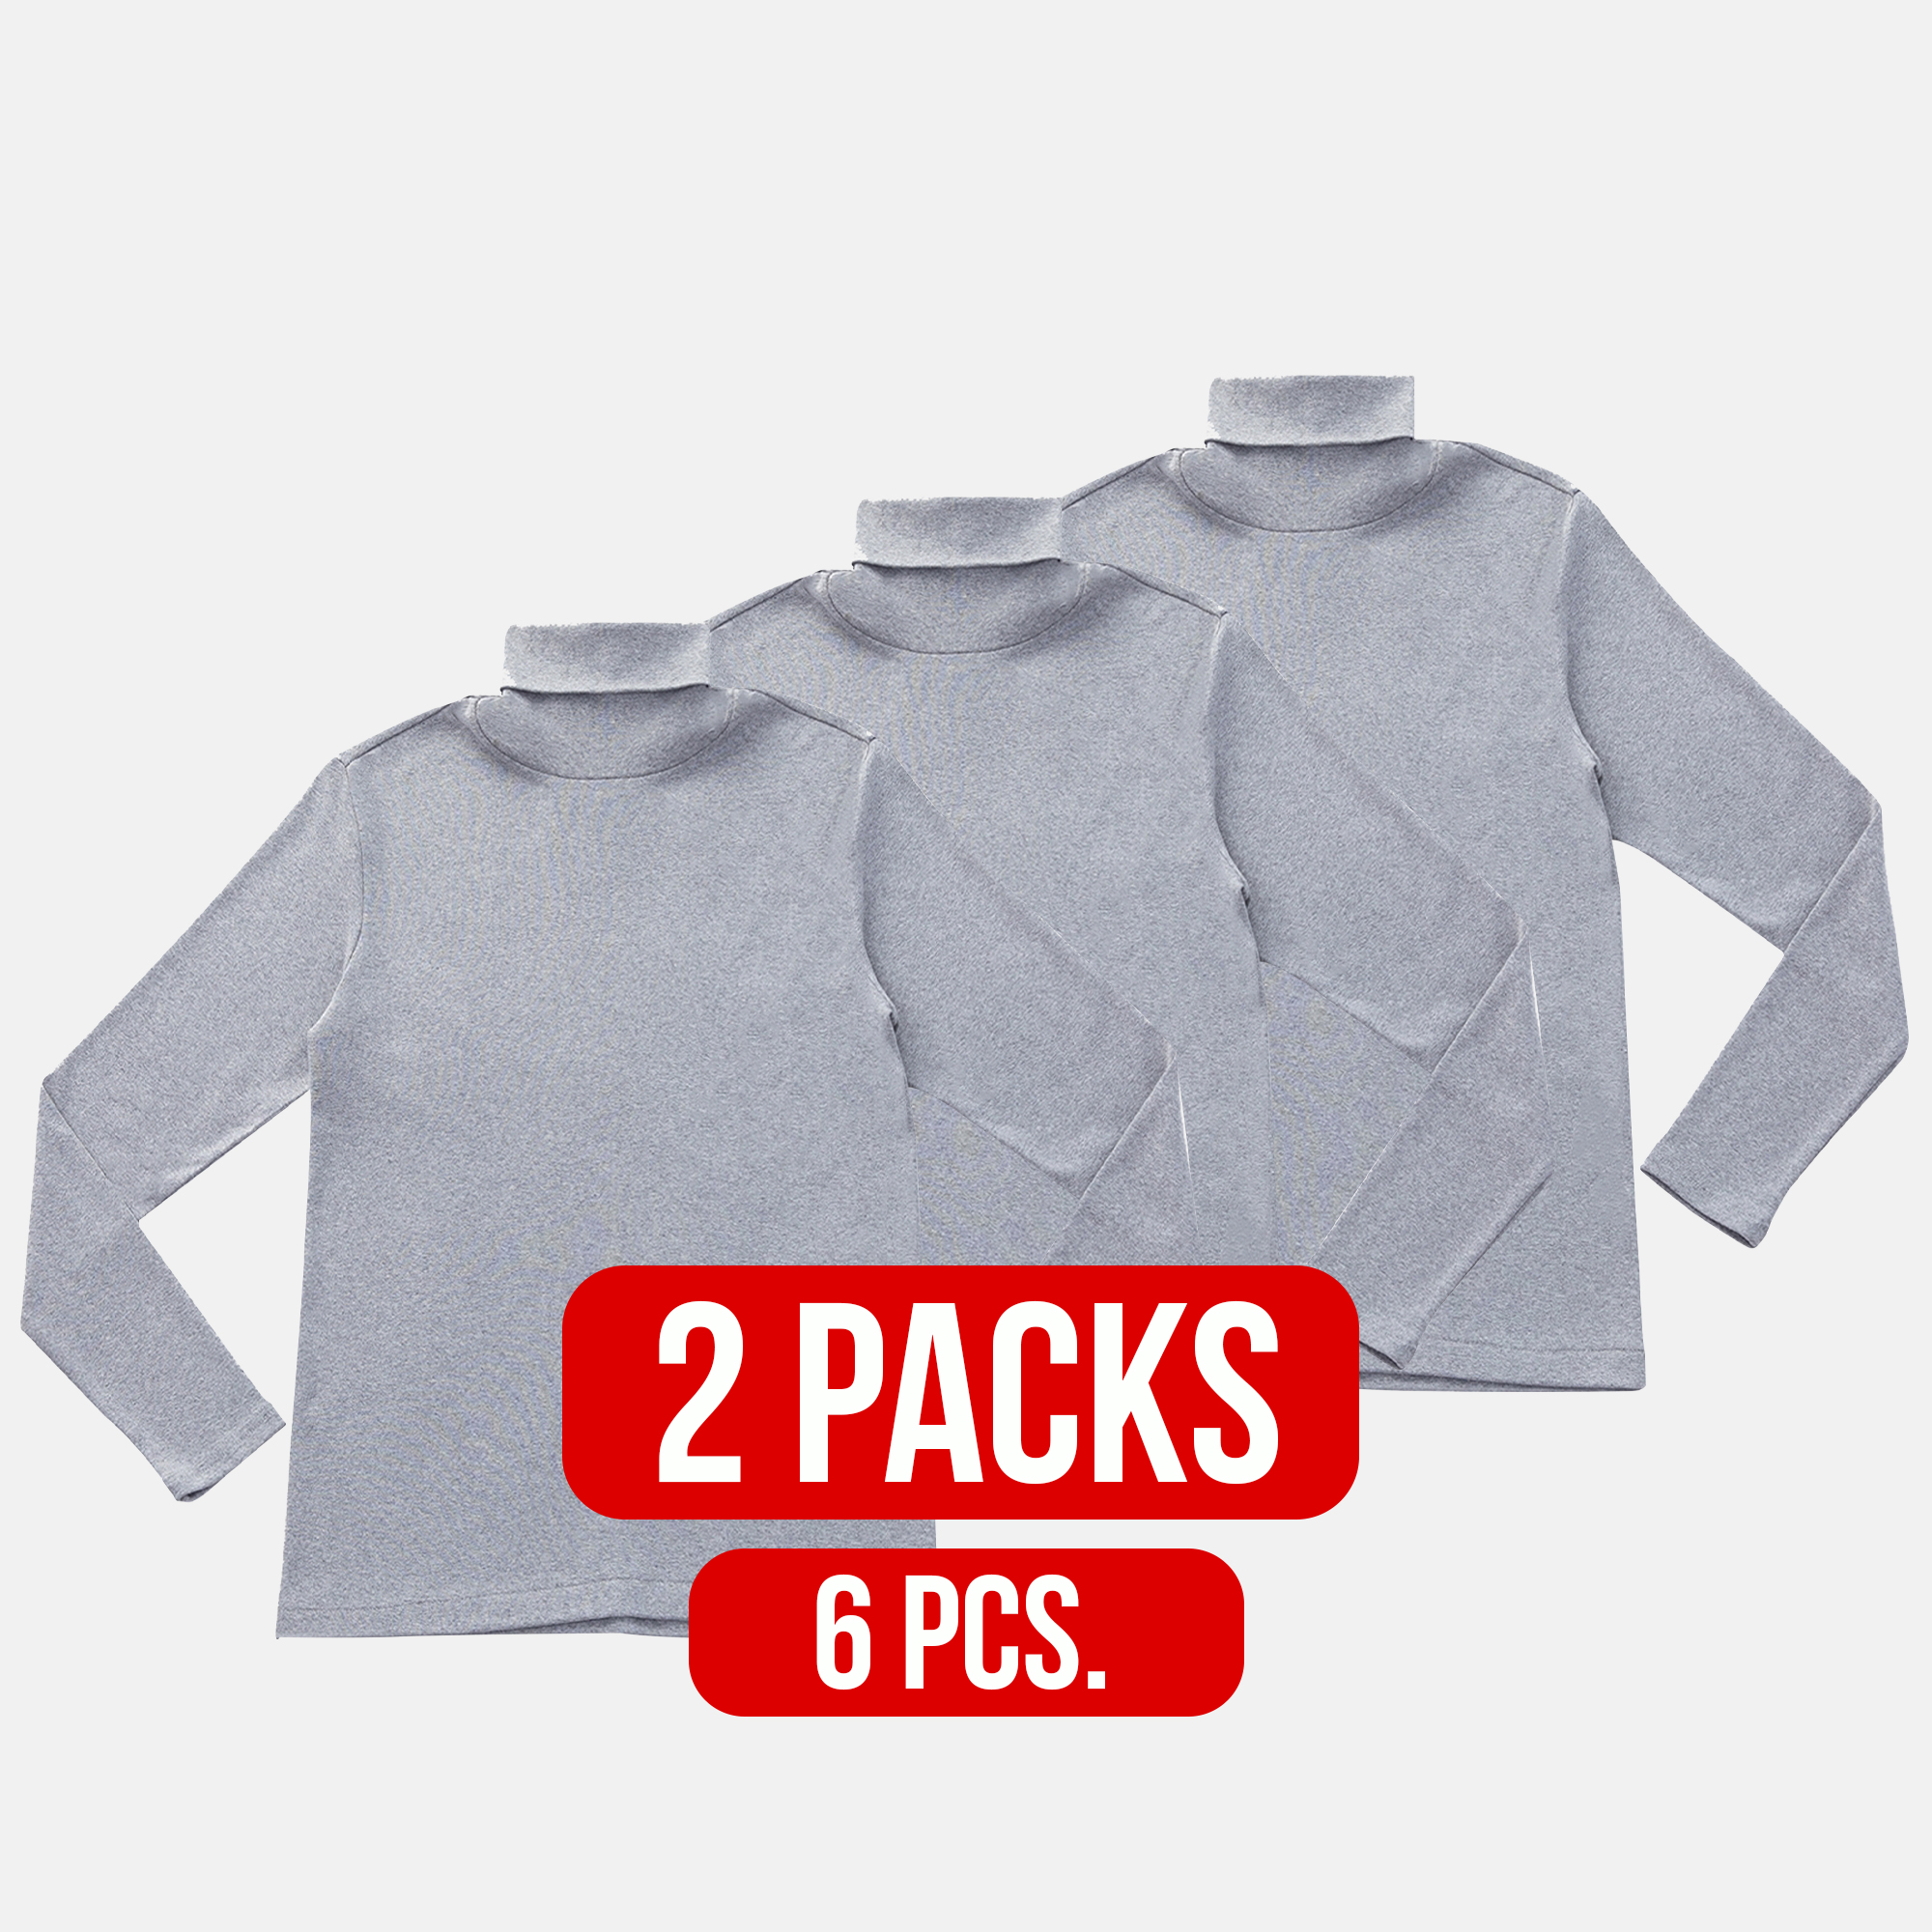 LONG SLEEVE T-shirt Turtle-Neck GREY (2Packs)(6 PCS.)